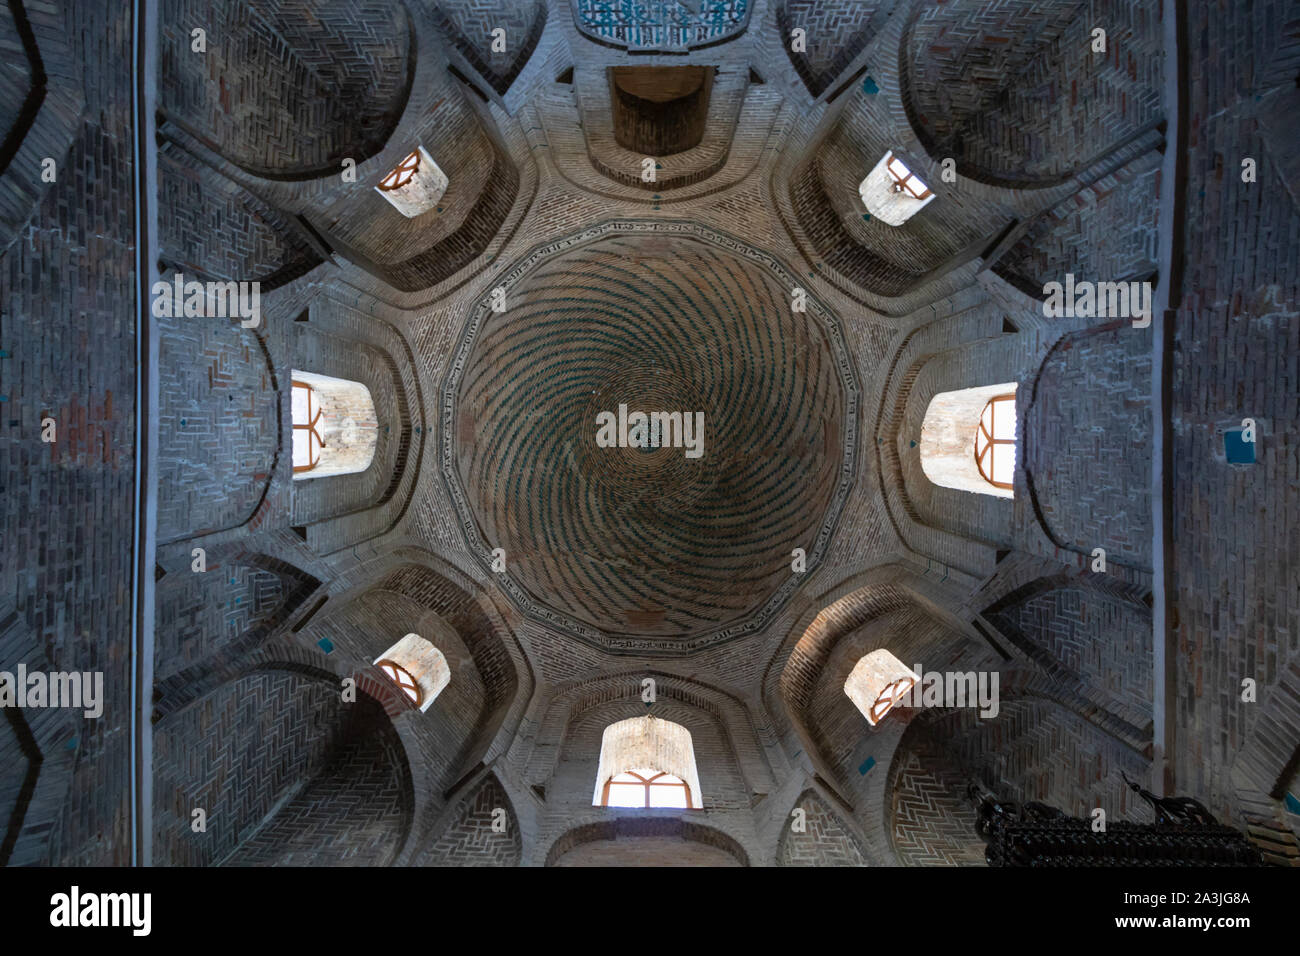 Dome of Great Mosque of Malatya (Malatya Ulucamii) in Turkey Stock Photo